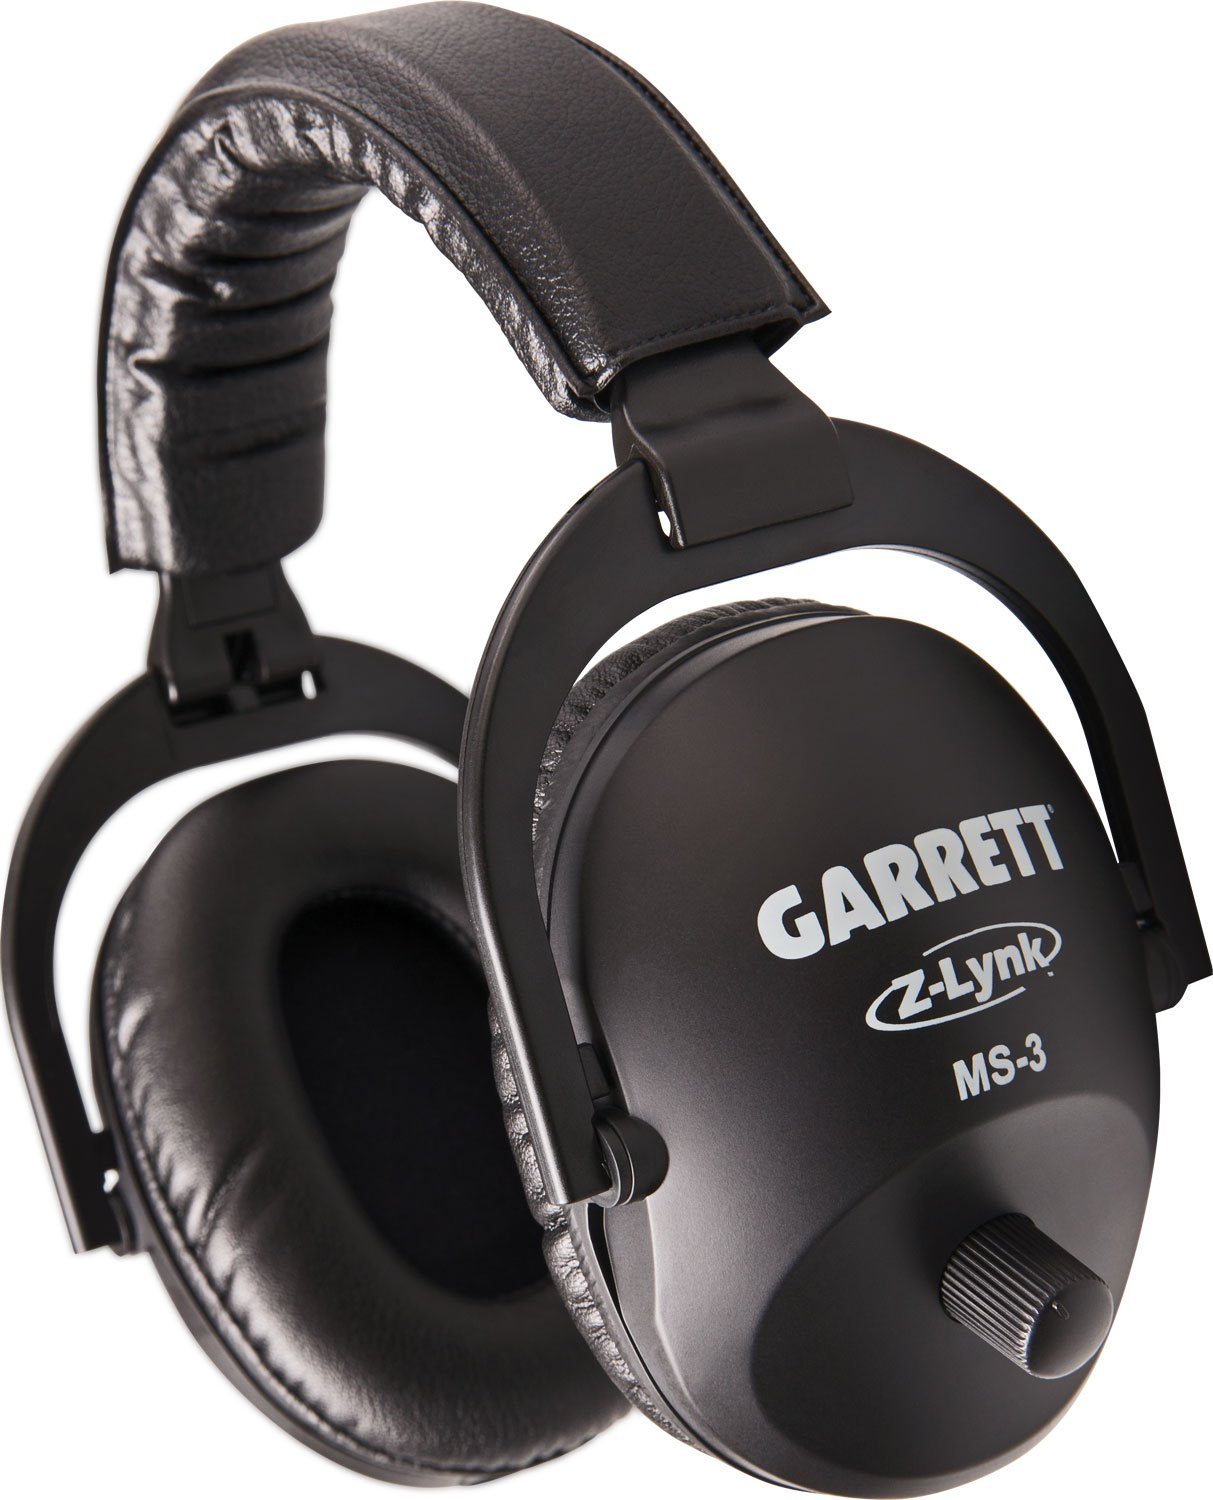 Garrett Jase Robertson Signature Edition APEX Metal Detector with Headphones for Z-Lynk